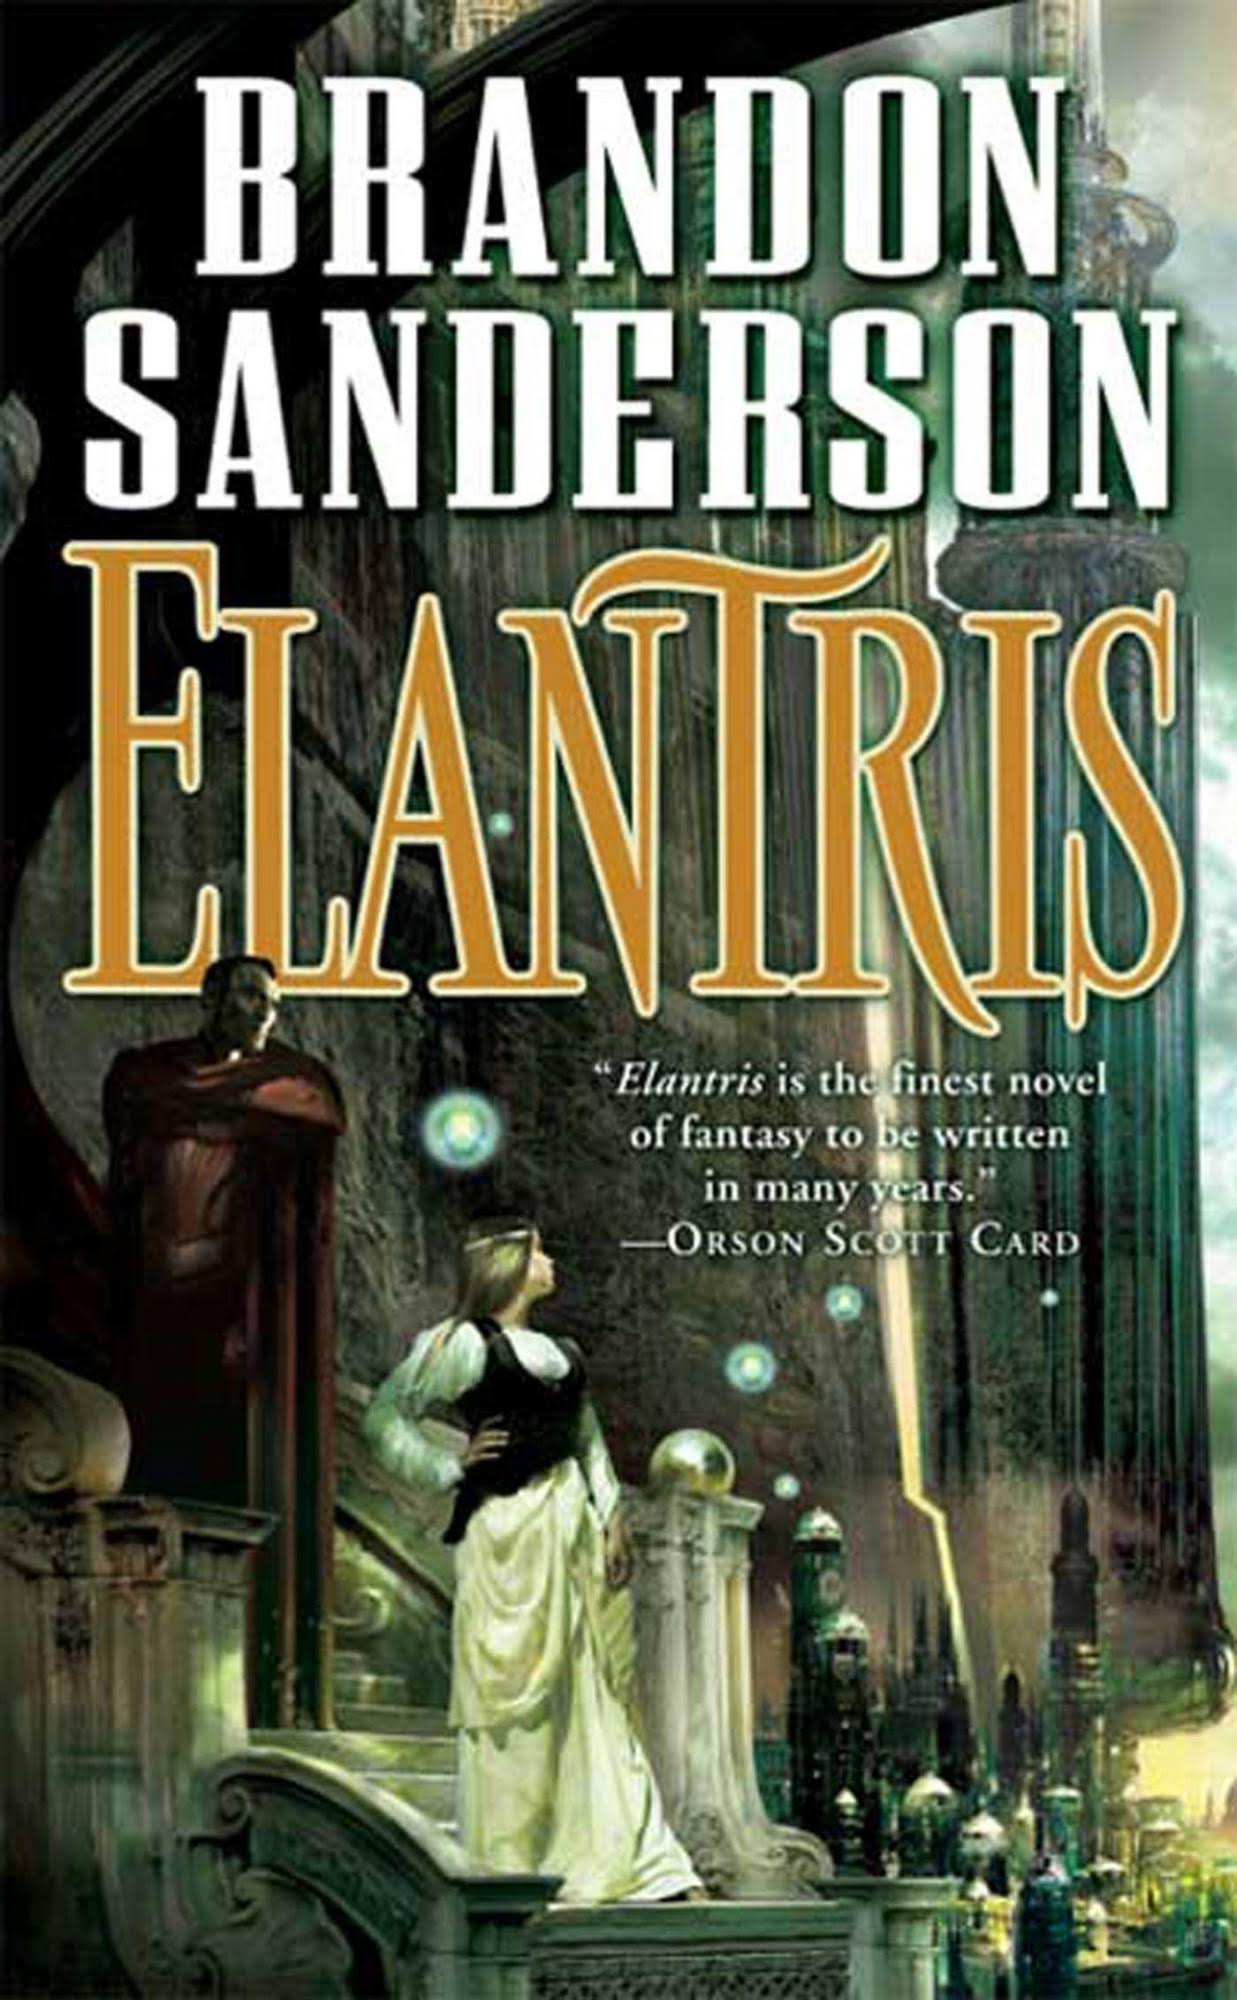 Elantris: Tenth Anniversary Author's Definitive Edition [Book]